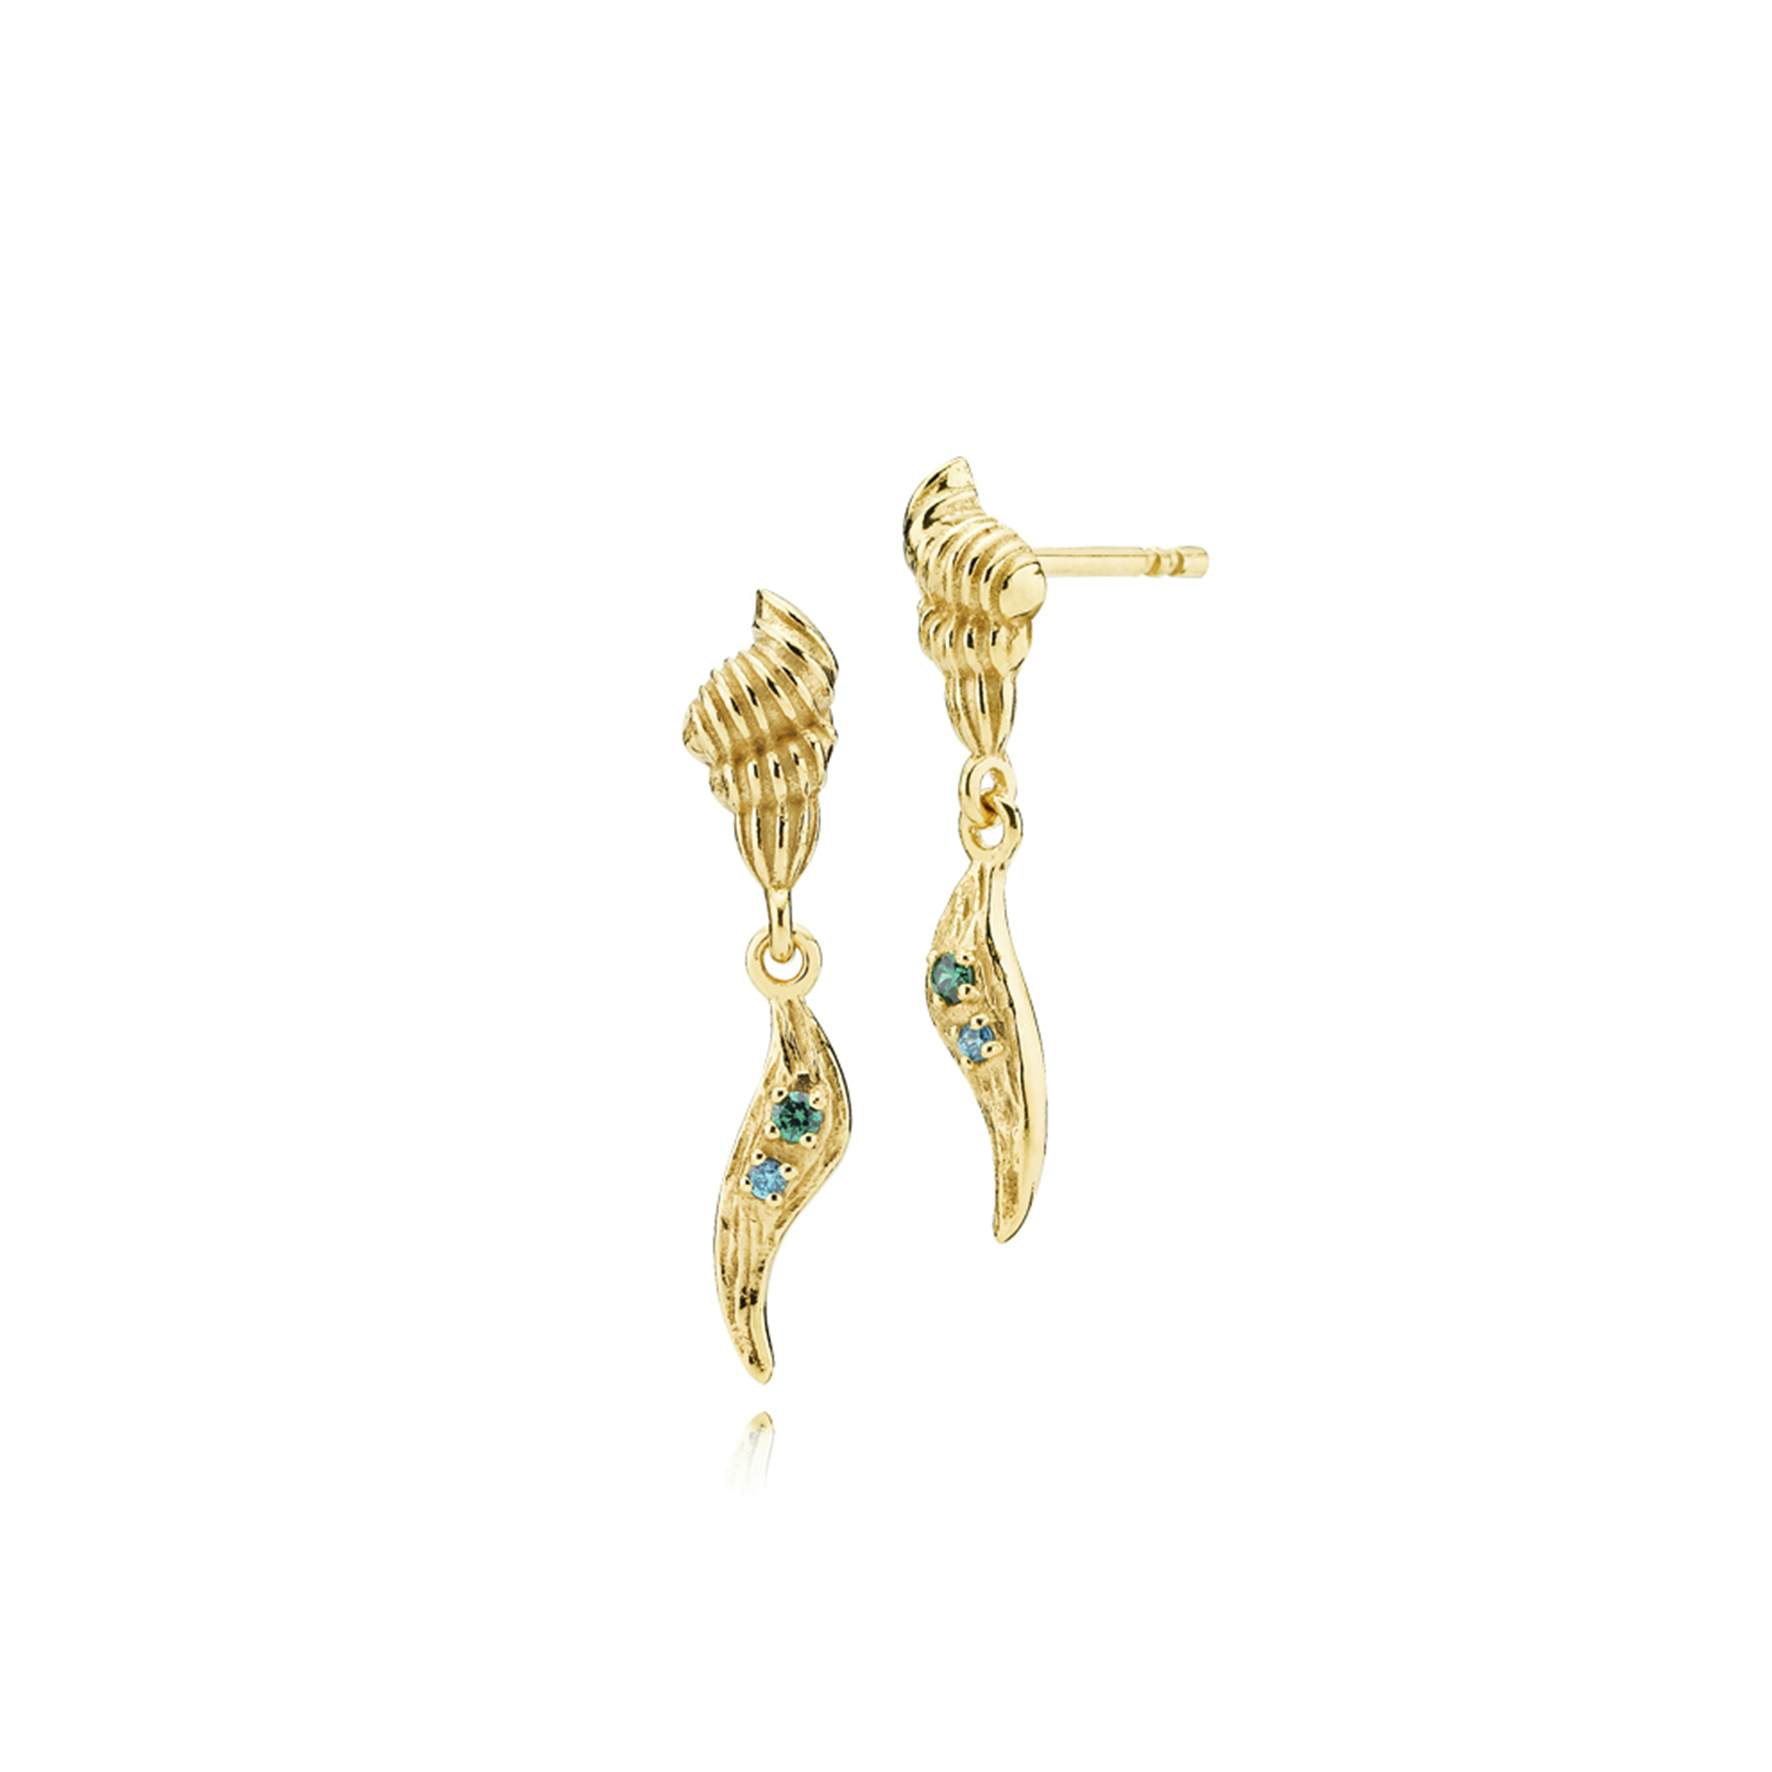 Kaia Earrings Green Onyx and Blue Topas von Sistie in Vergoldet-Silber Sterling 925